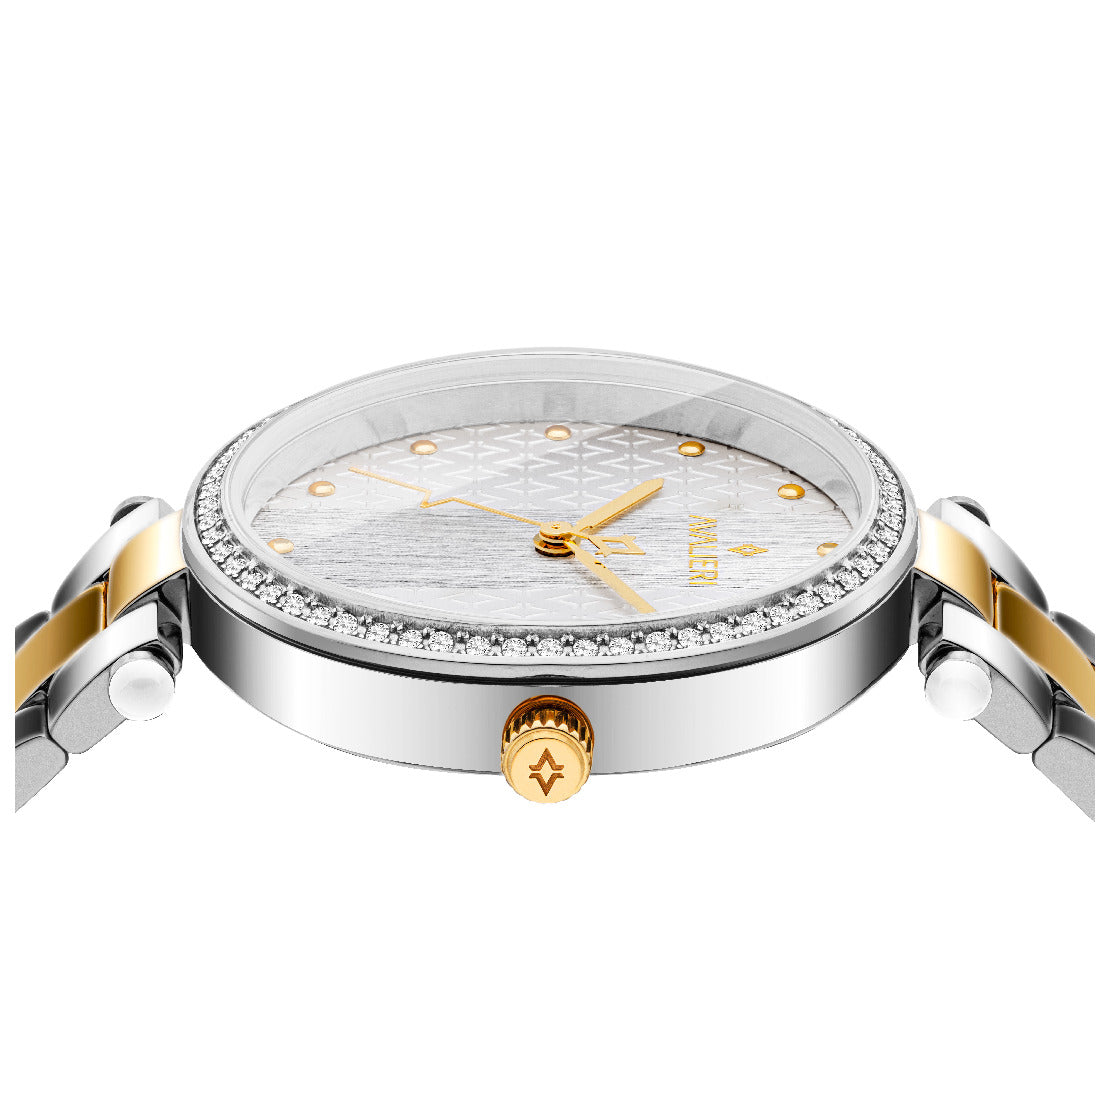 Avalieri Women's Quartz Watch Silver Dial - AV-2449B